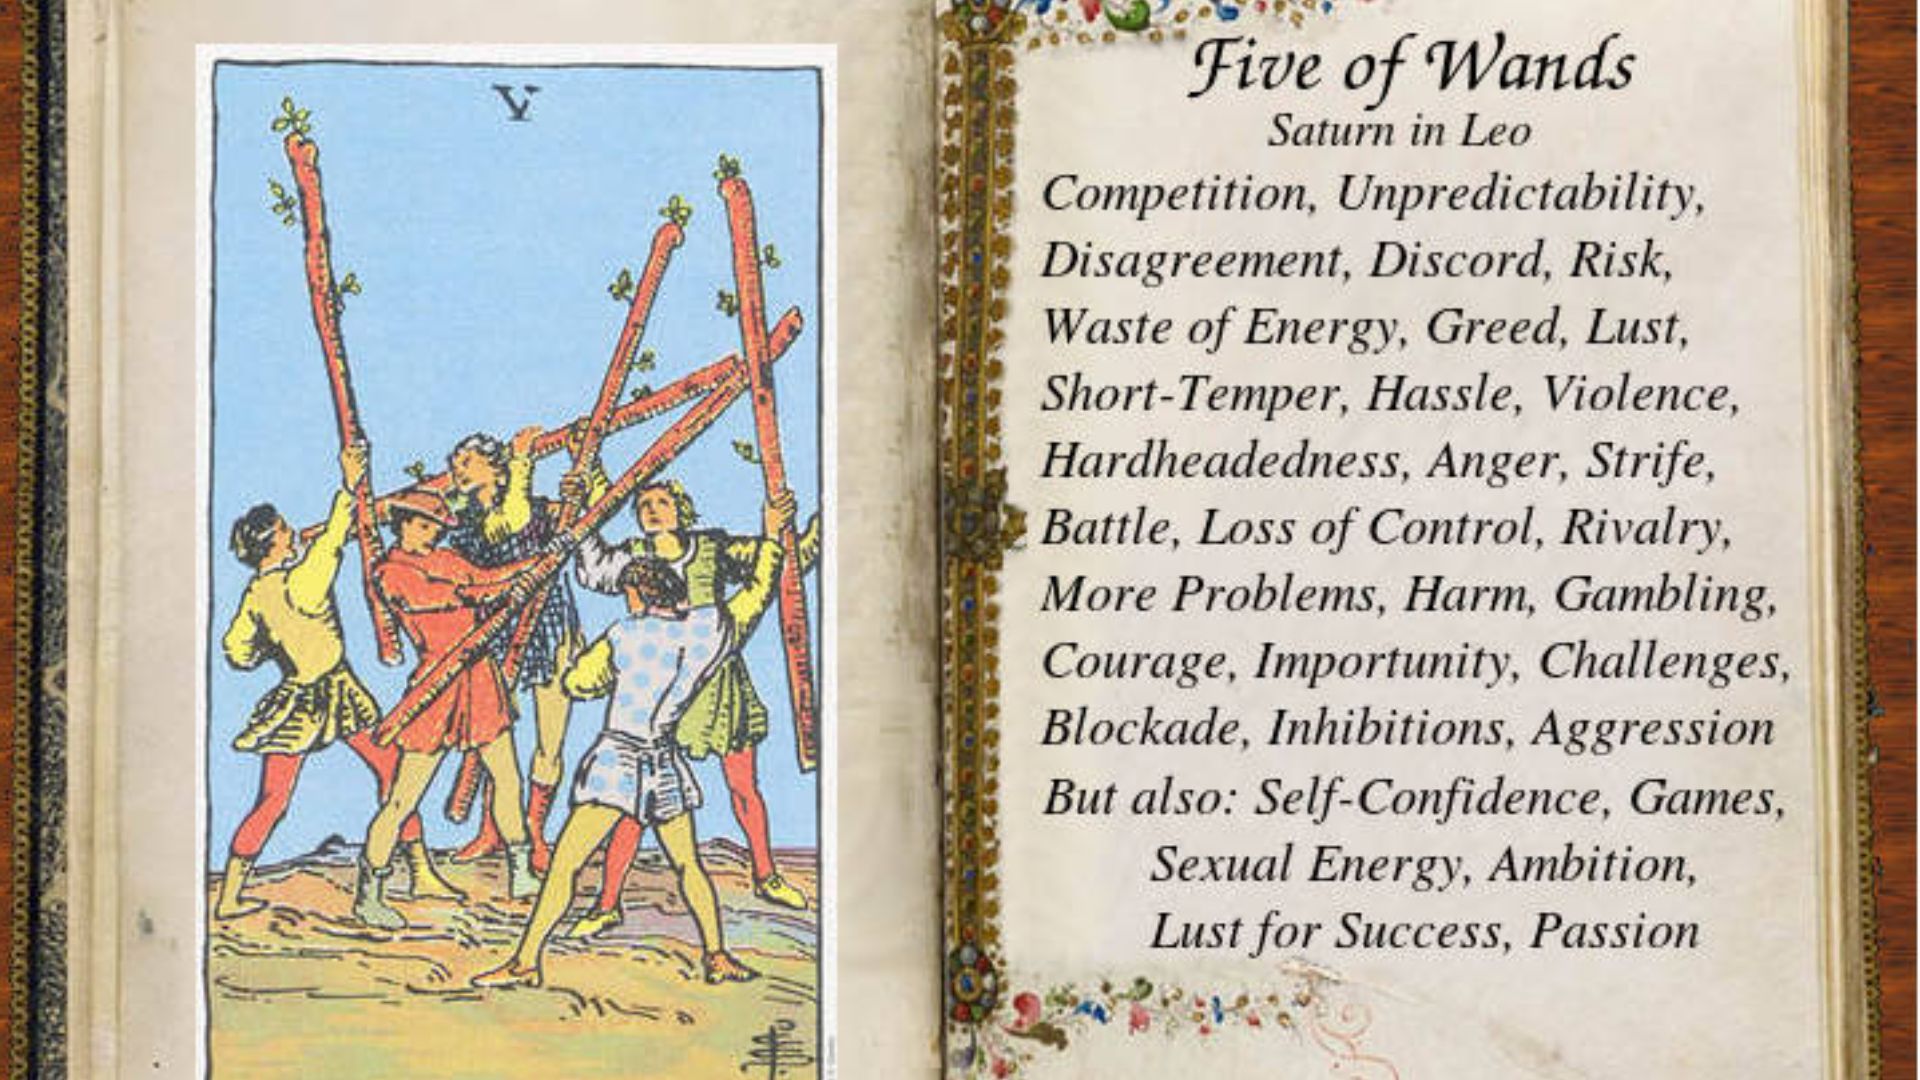 Five Of Wands Tarot Card With Description